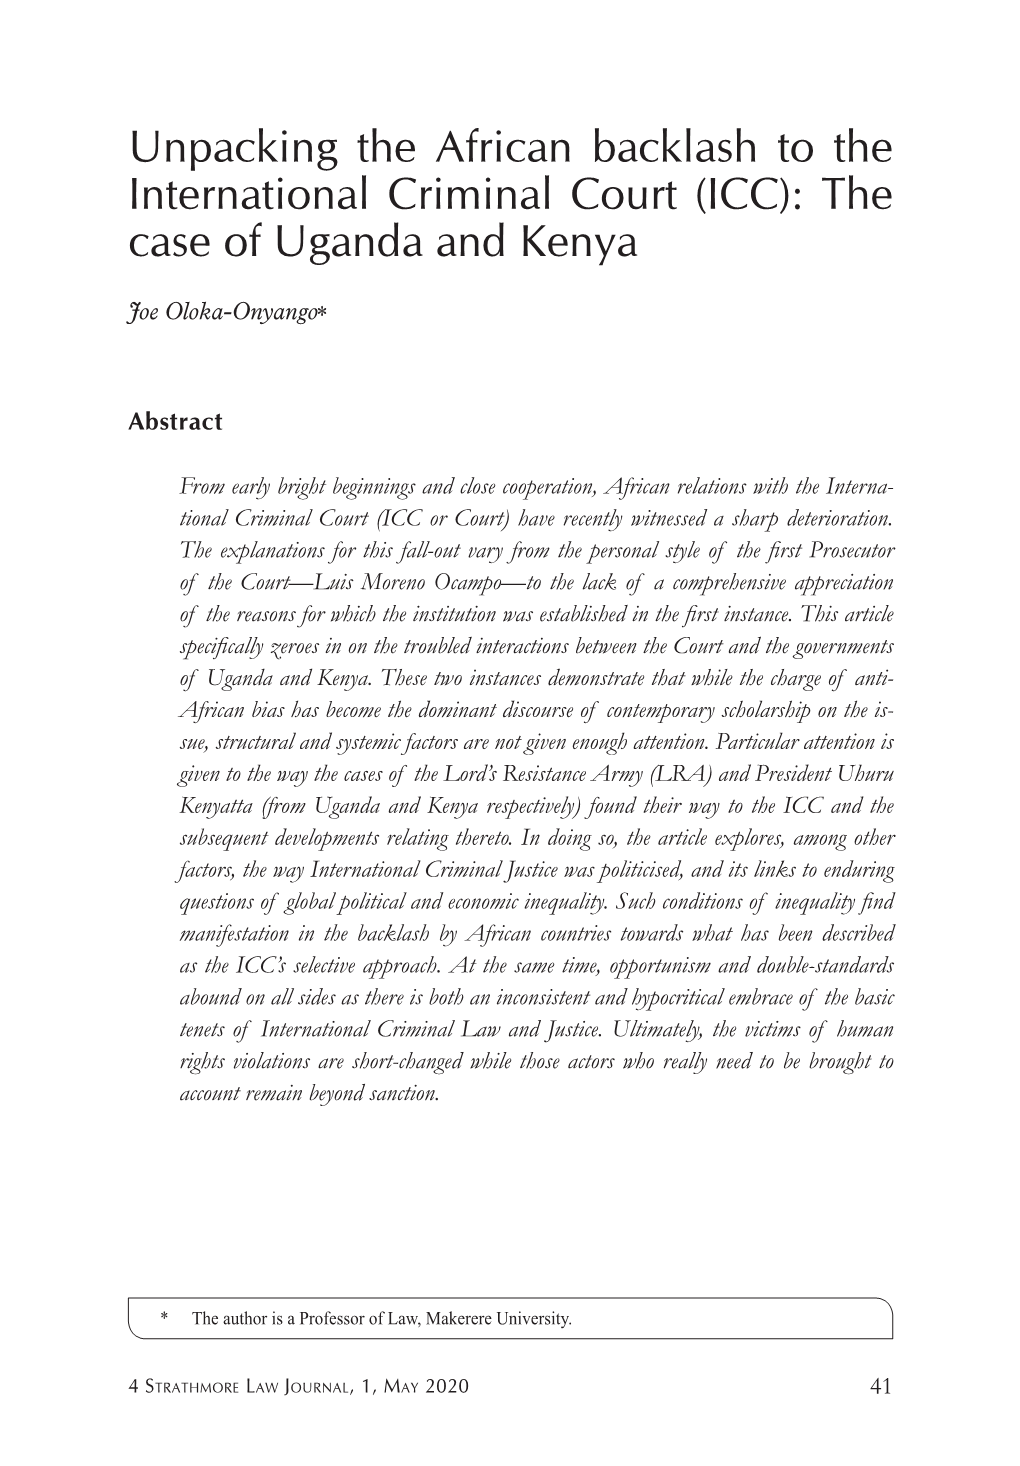 Unpacking the African Backlash to the International Criminal Court (ICC): the Case of Uganda and Kenya